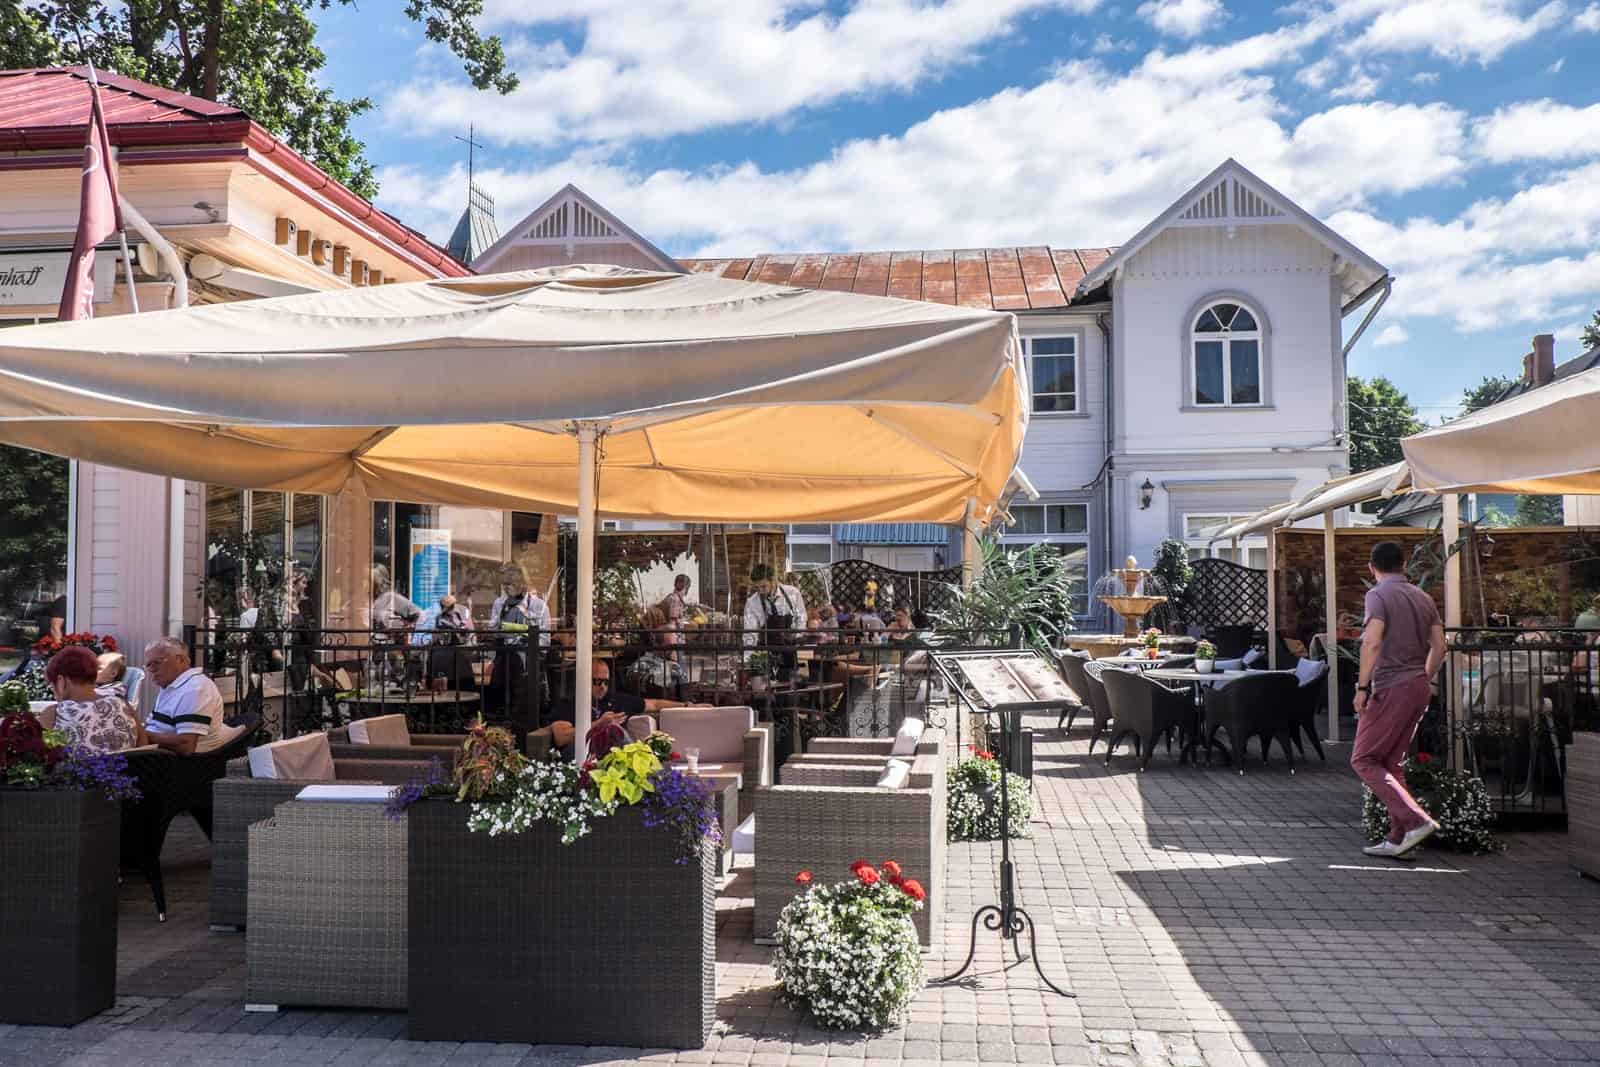 One of the many restaurants found in Jumala beach town, Latvia